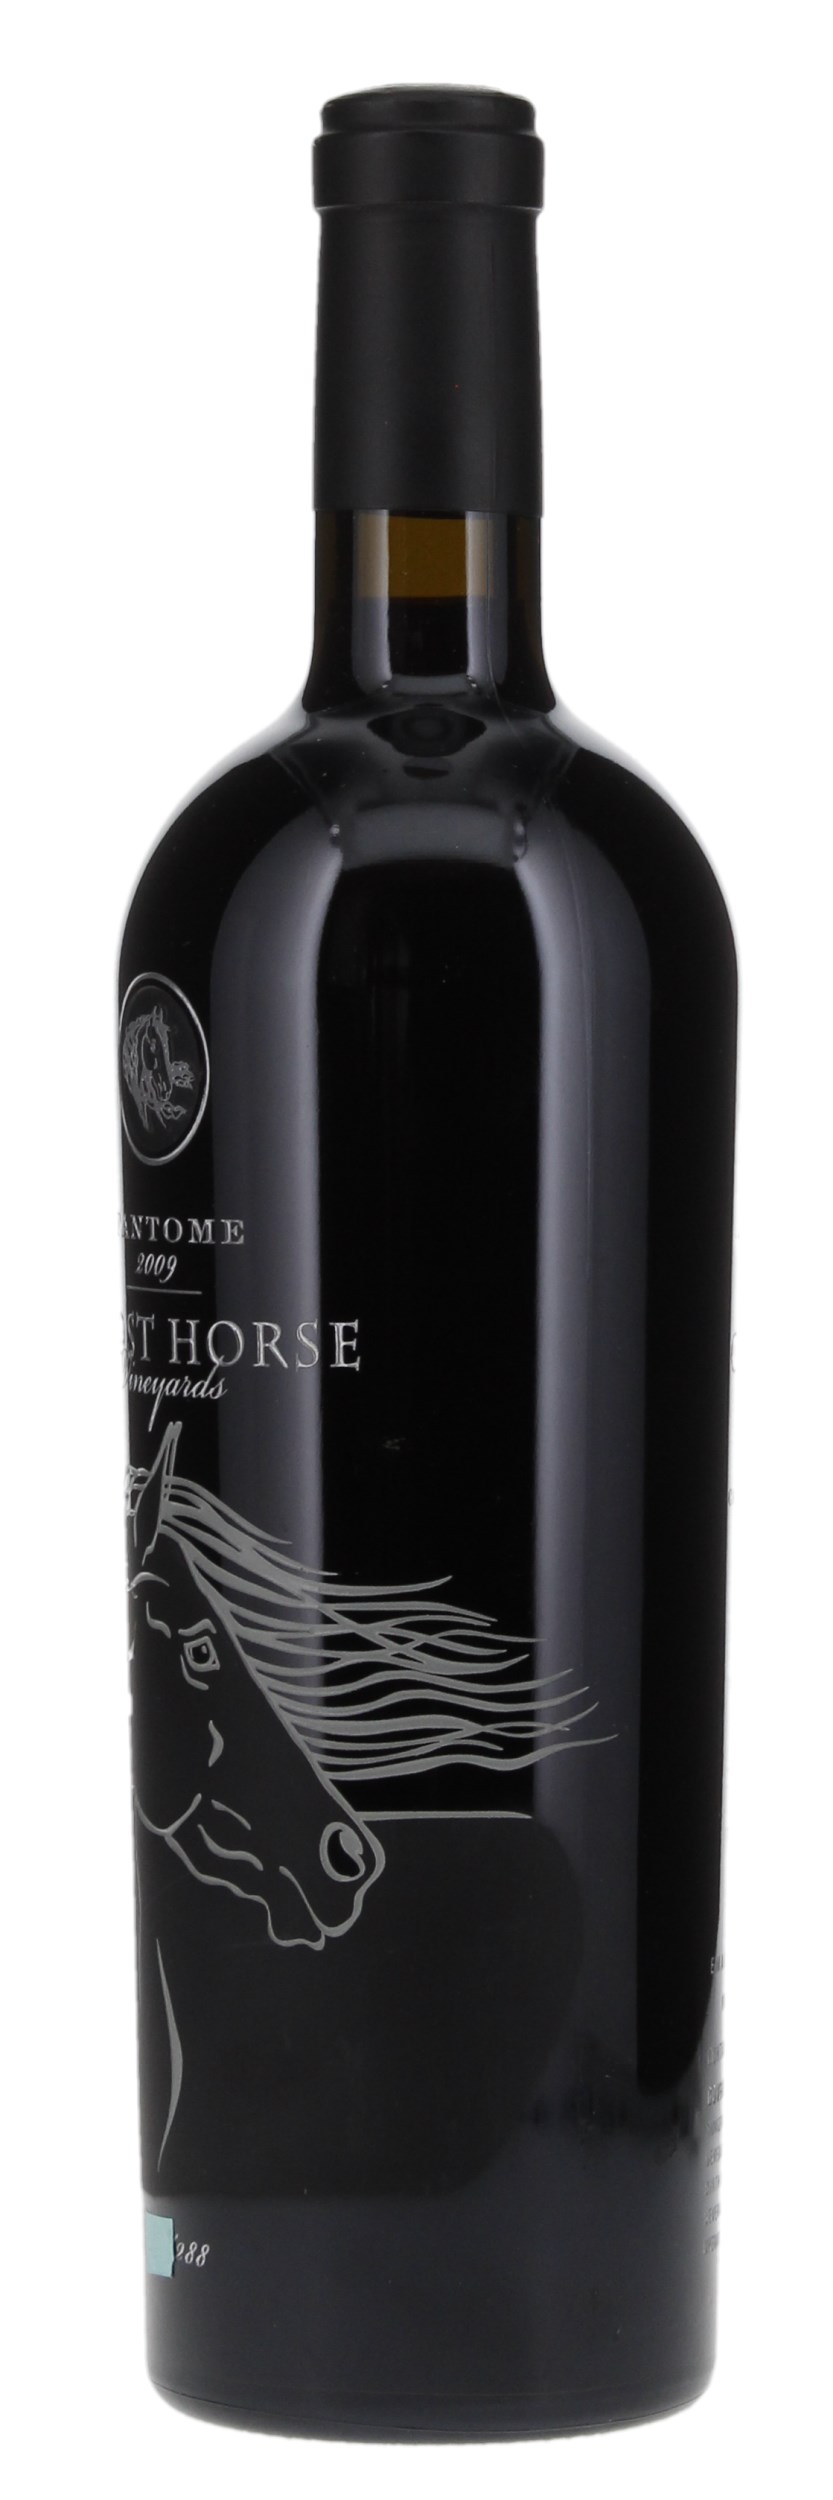 2009 Ghost Horse Vineyard Fantome Cabernet Sauvignon, 750ml